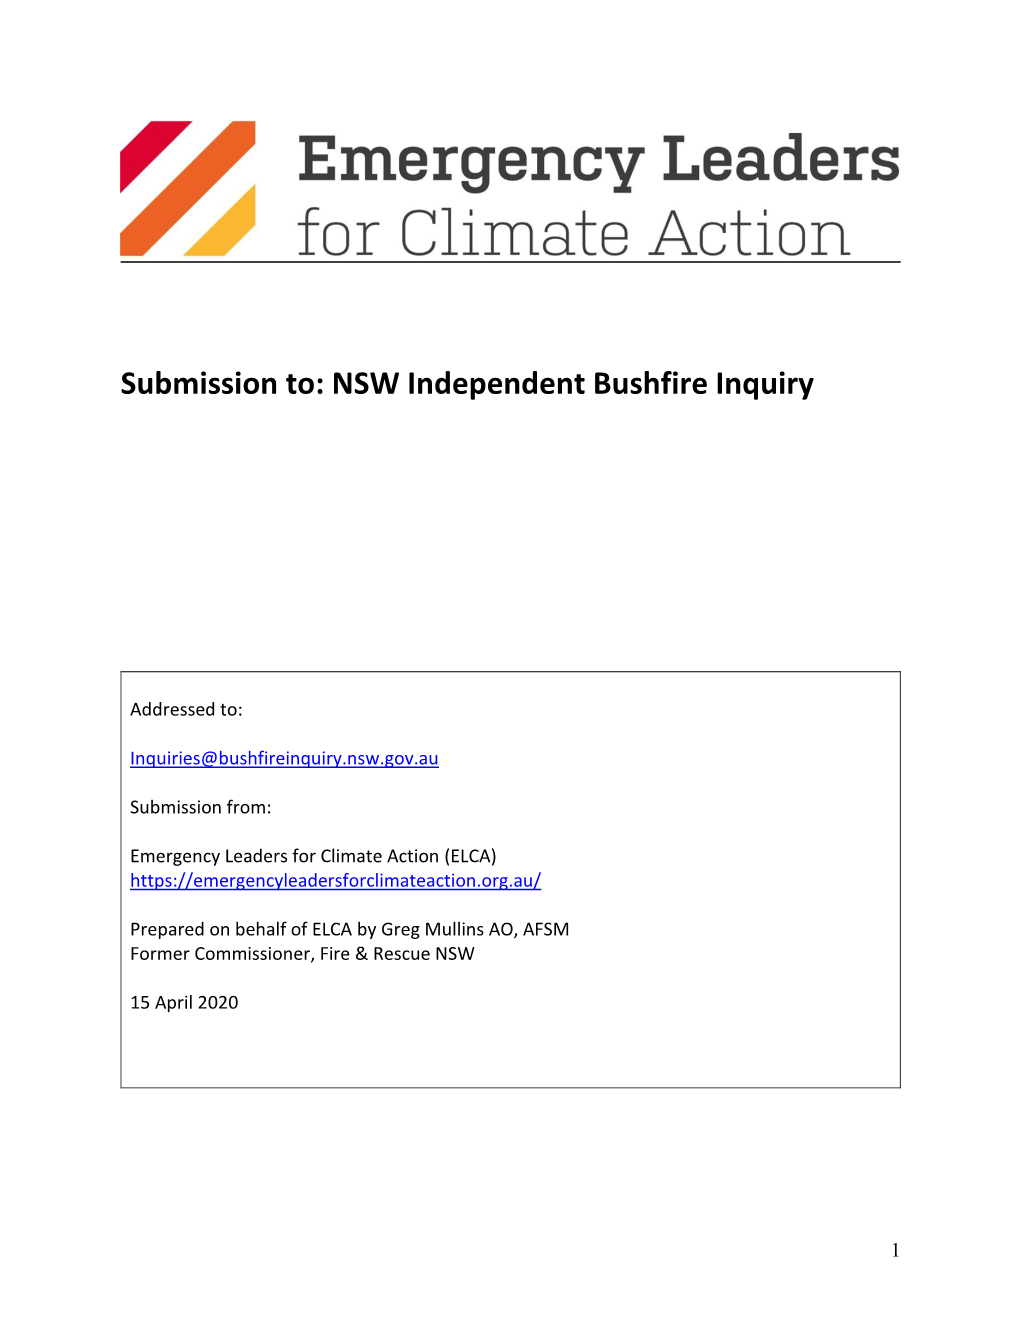 NSW Independent Bushfire Inquiry